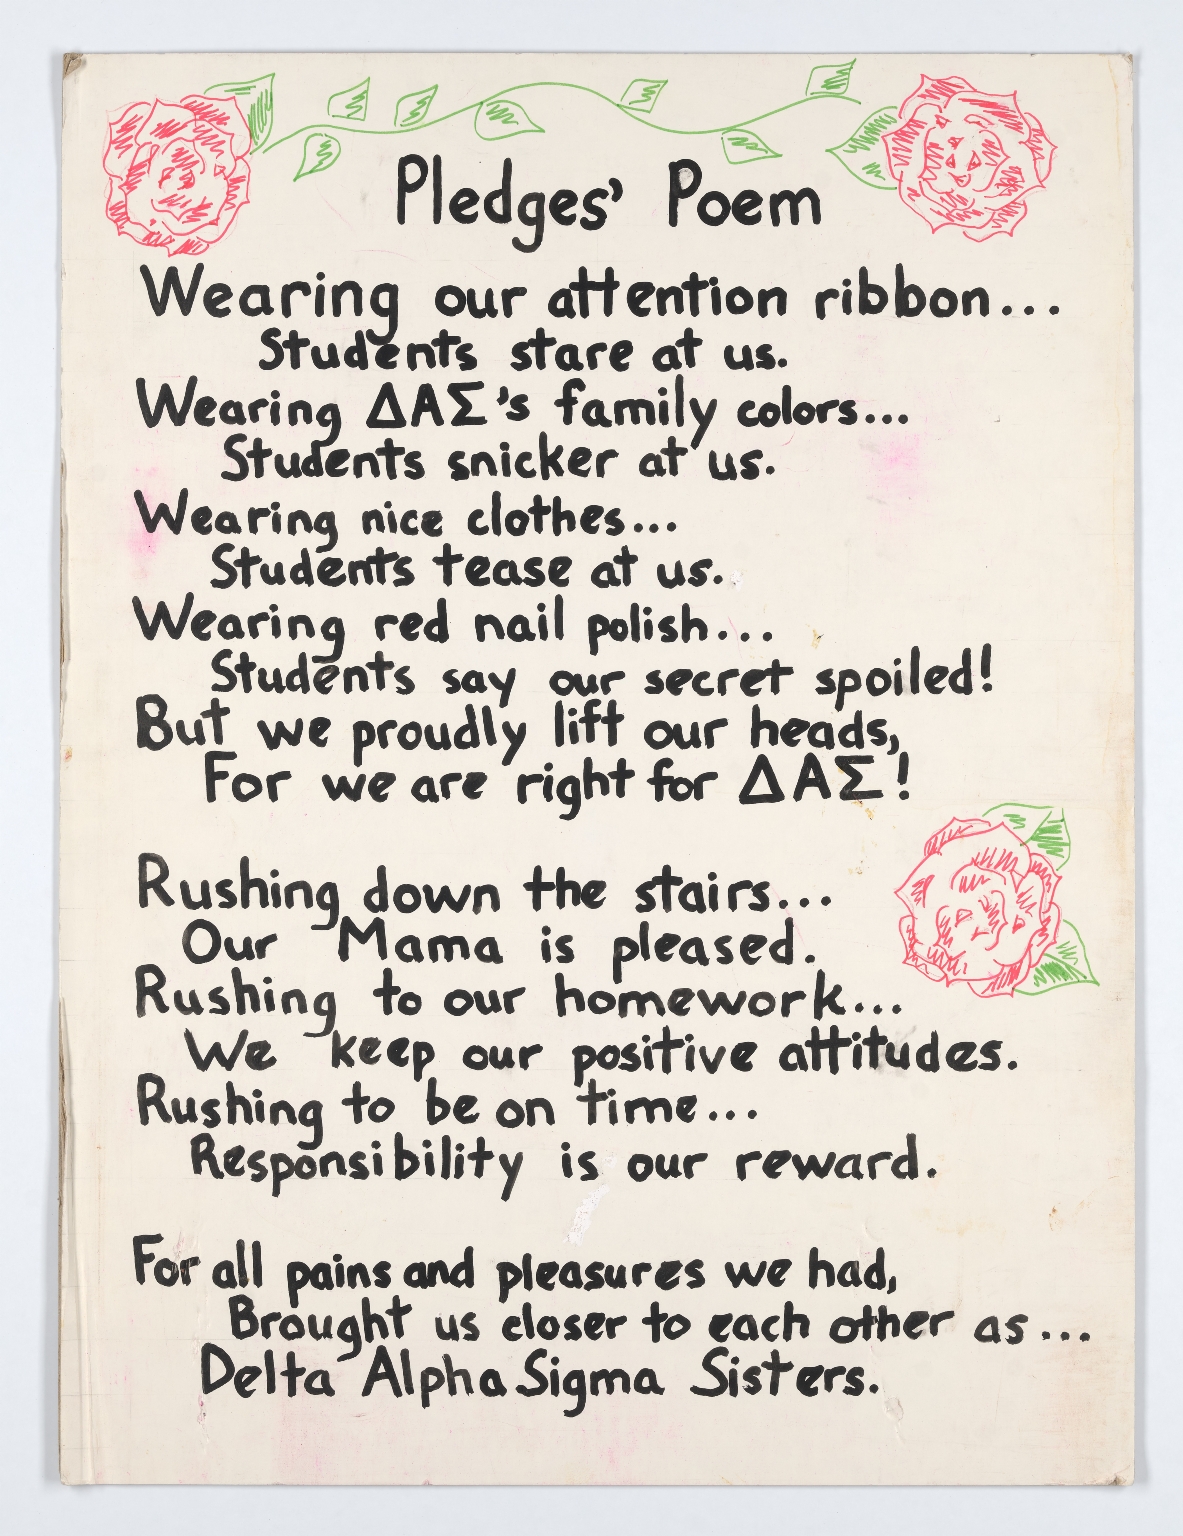 Pledges' Poem